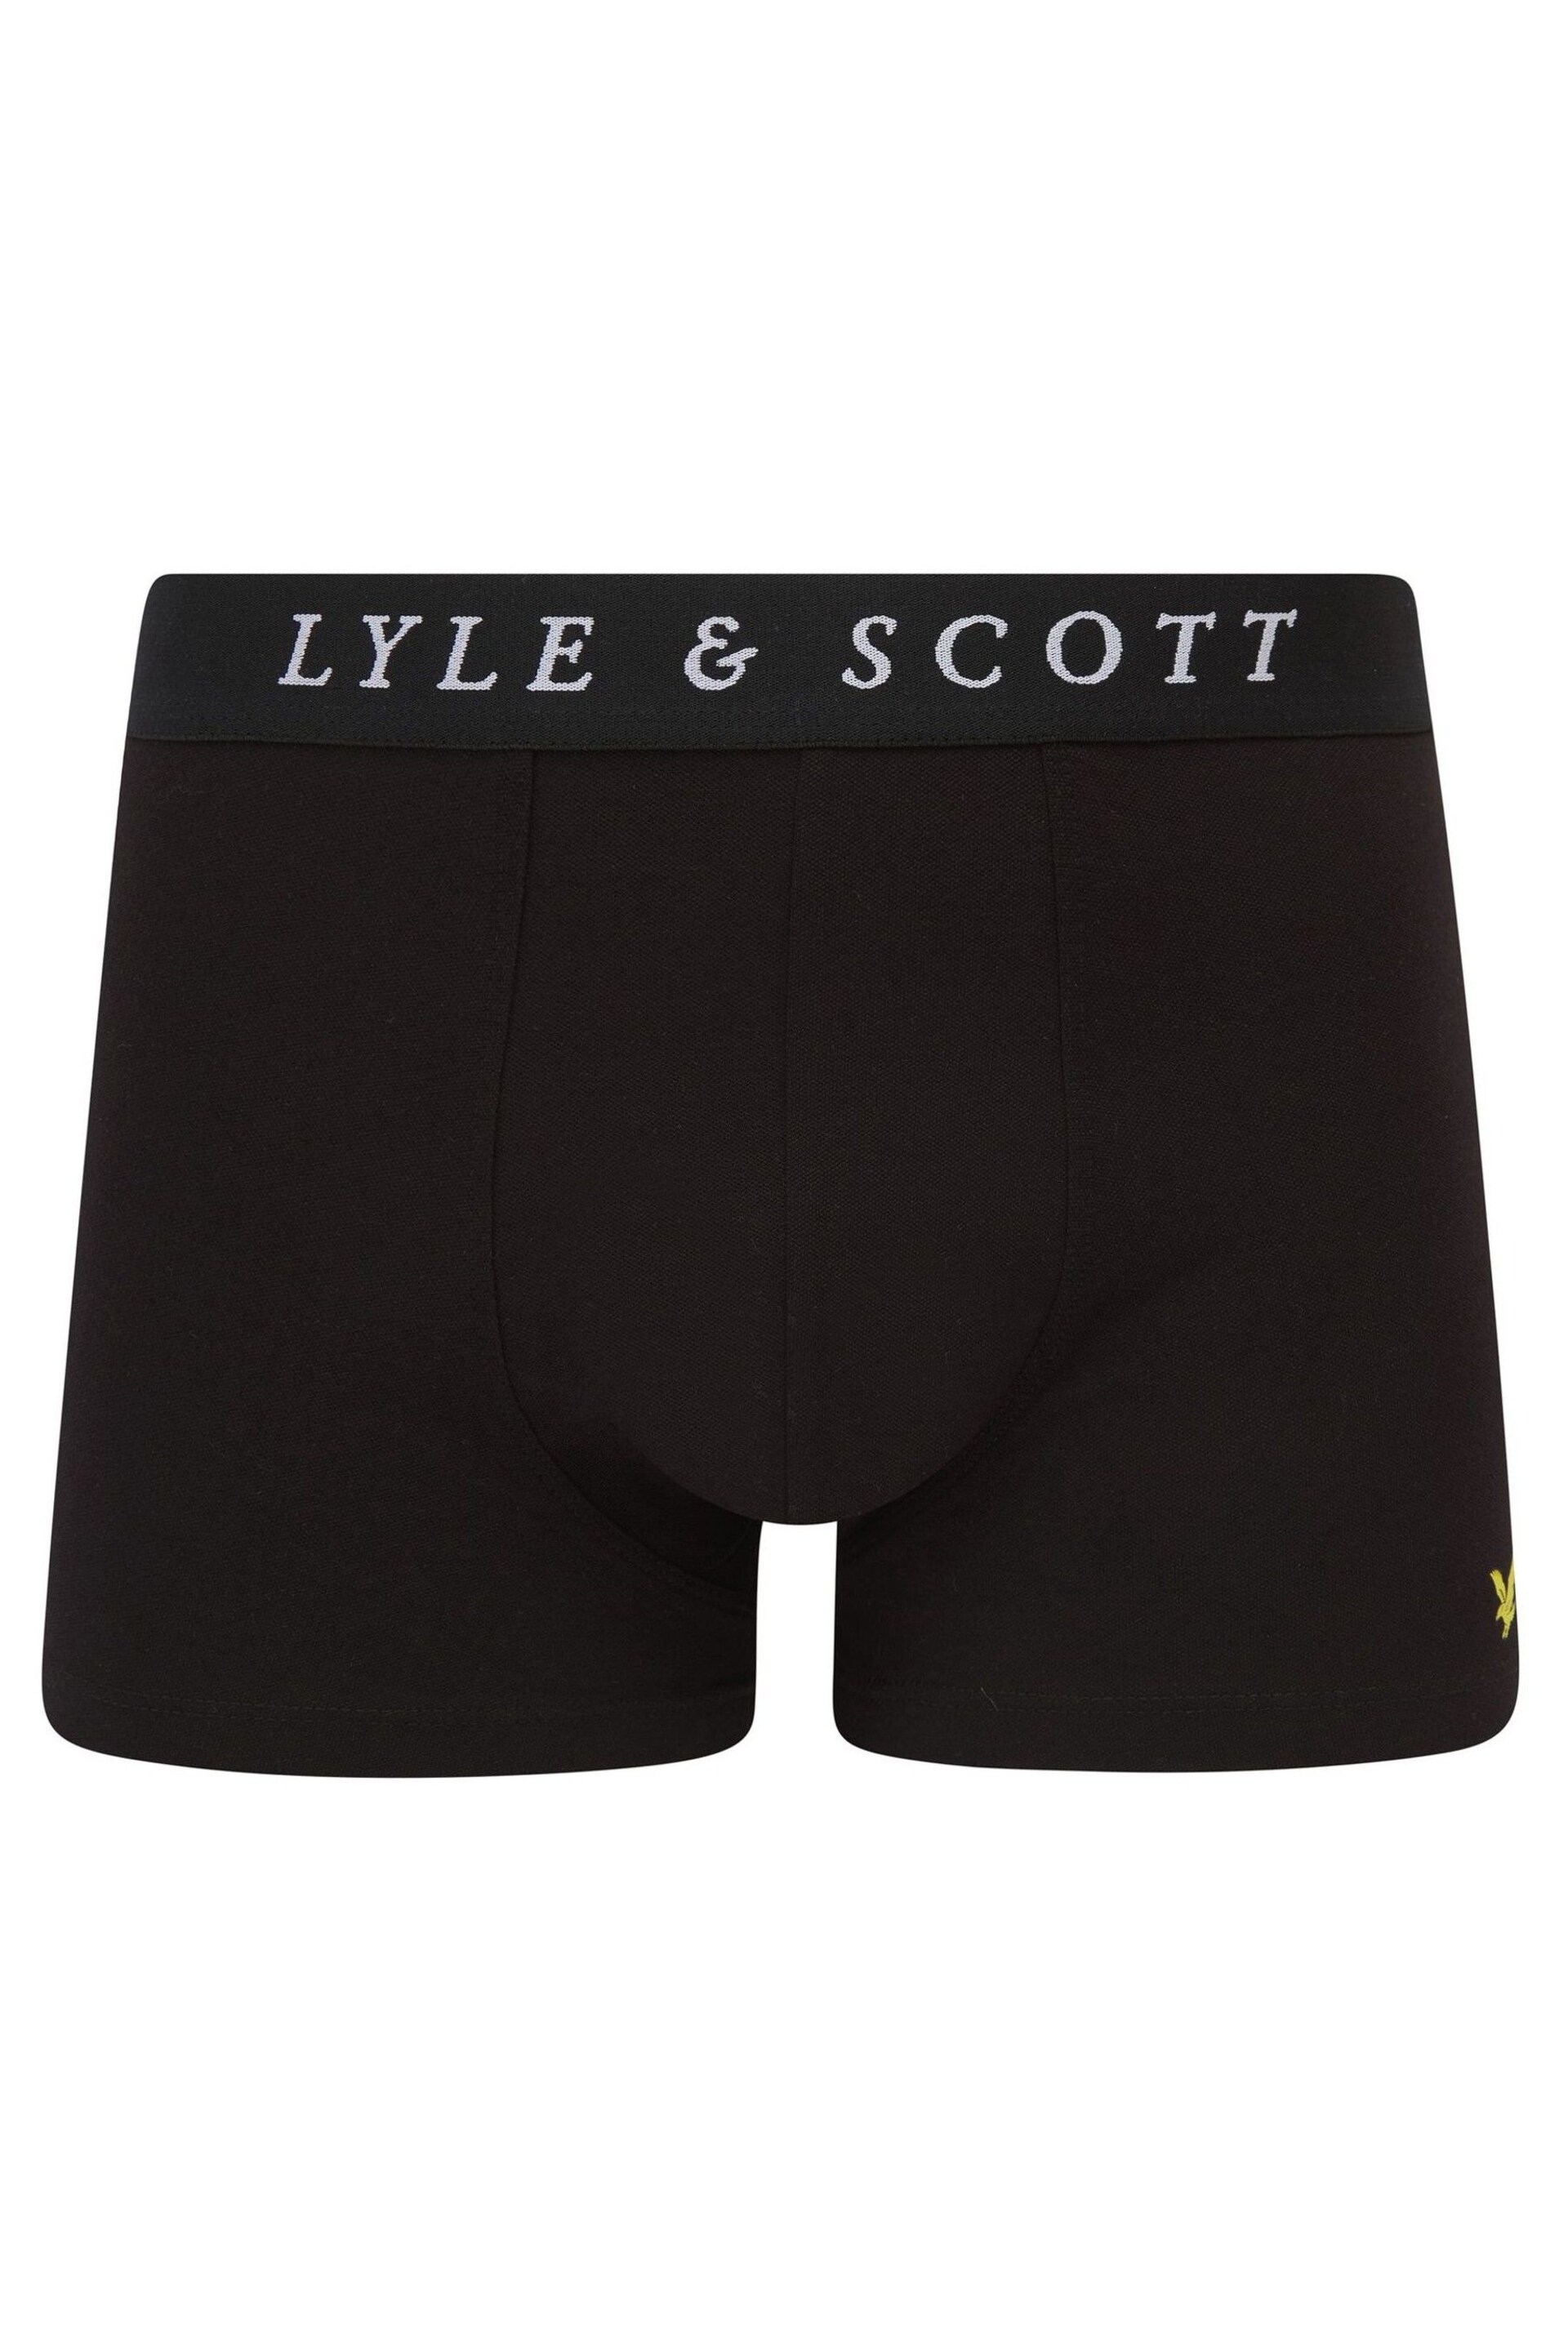 Lyle & Scott Black Underwear Trunks 3 Pack - Image 2 of 2